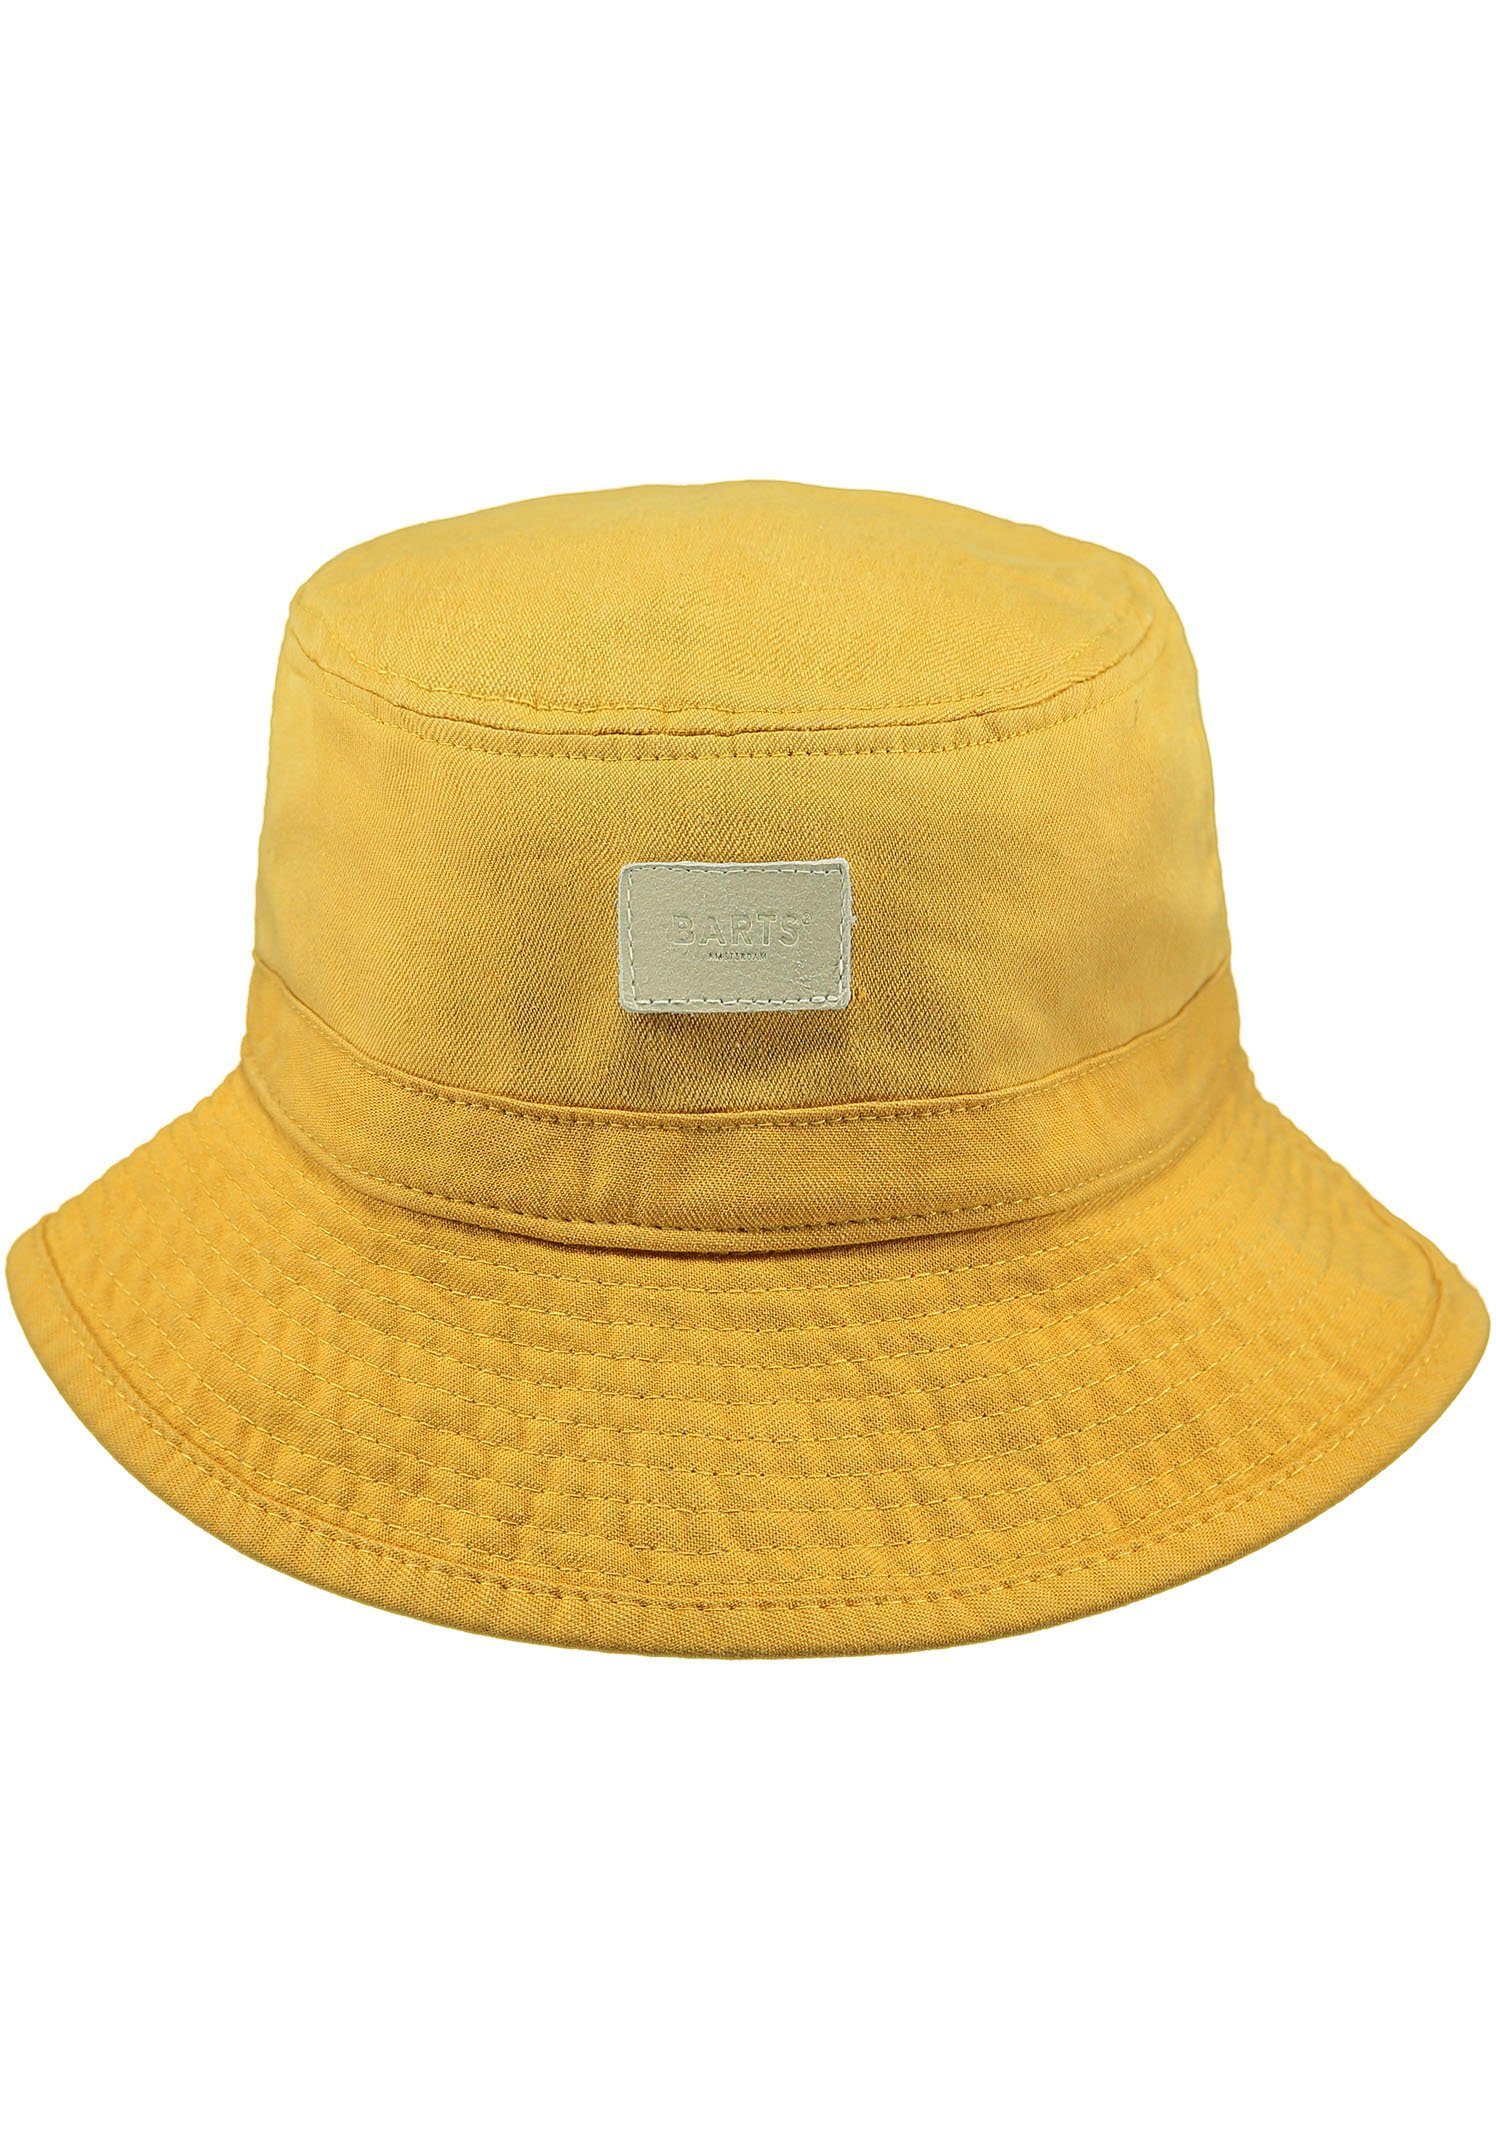 Barts Hat yellow Orohena Fischerhut